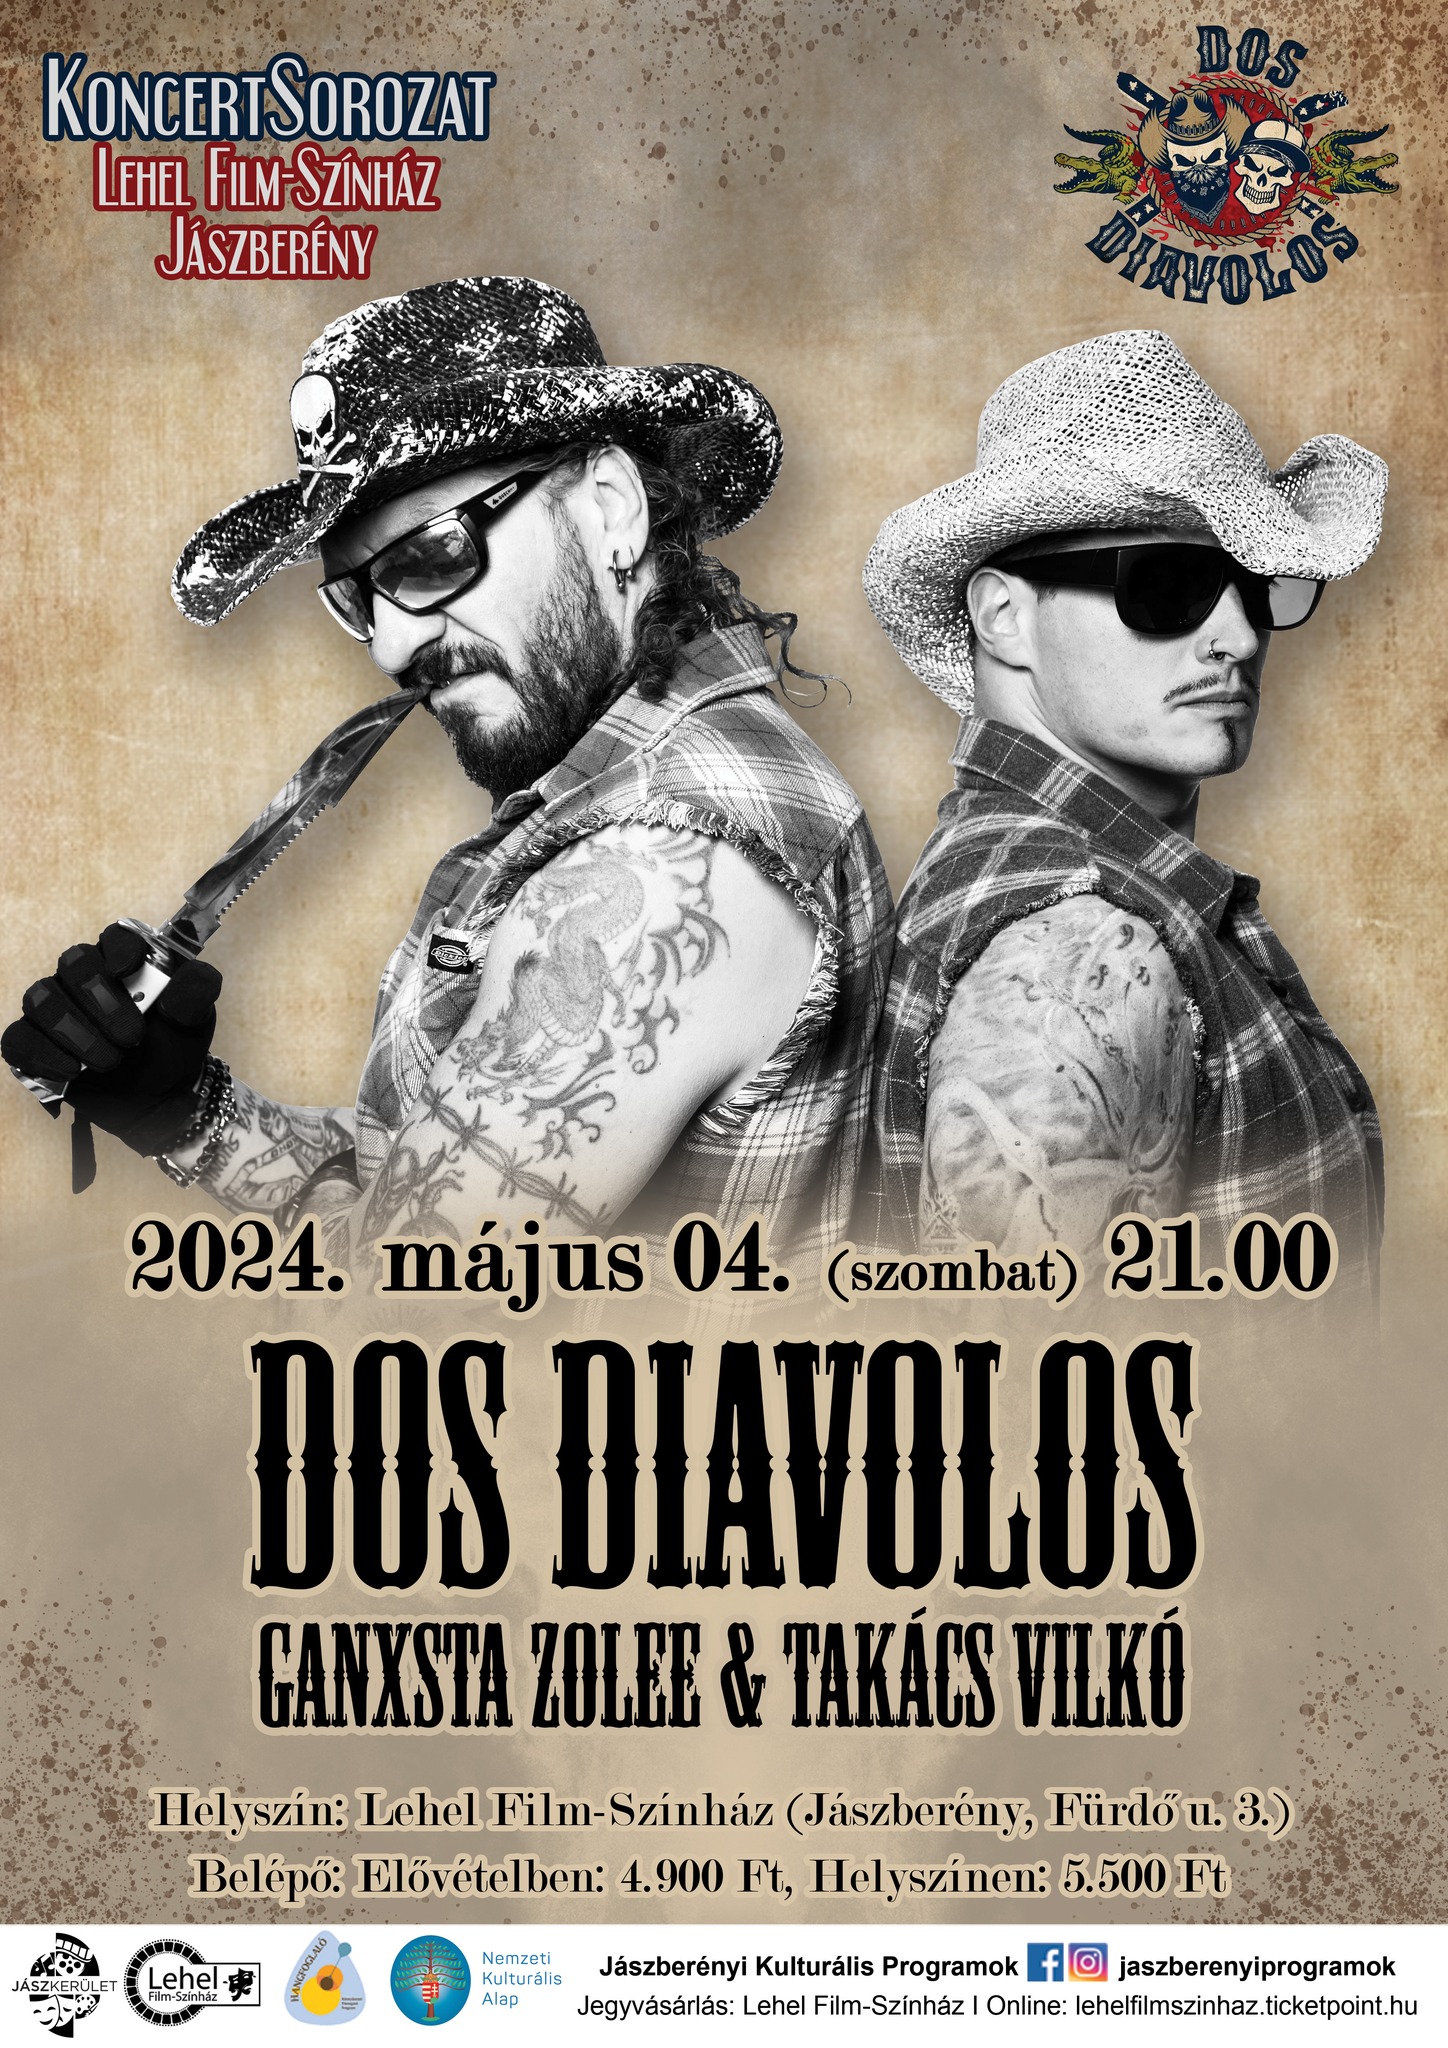 Klubkoncert Dos Diavolos - Ganxsta Zolee & Takács Vilkó